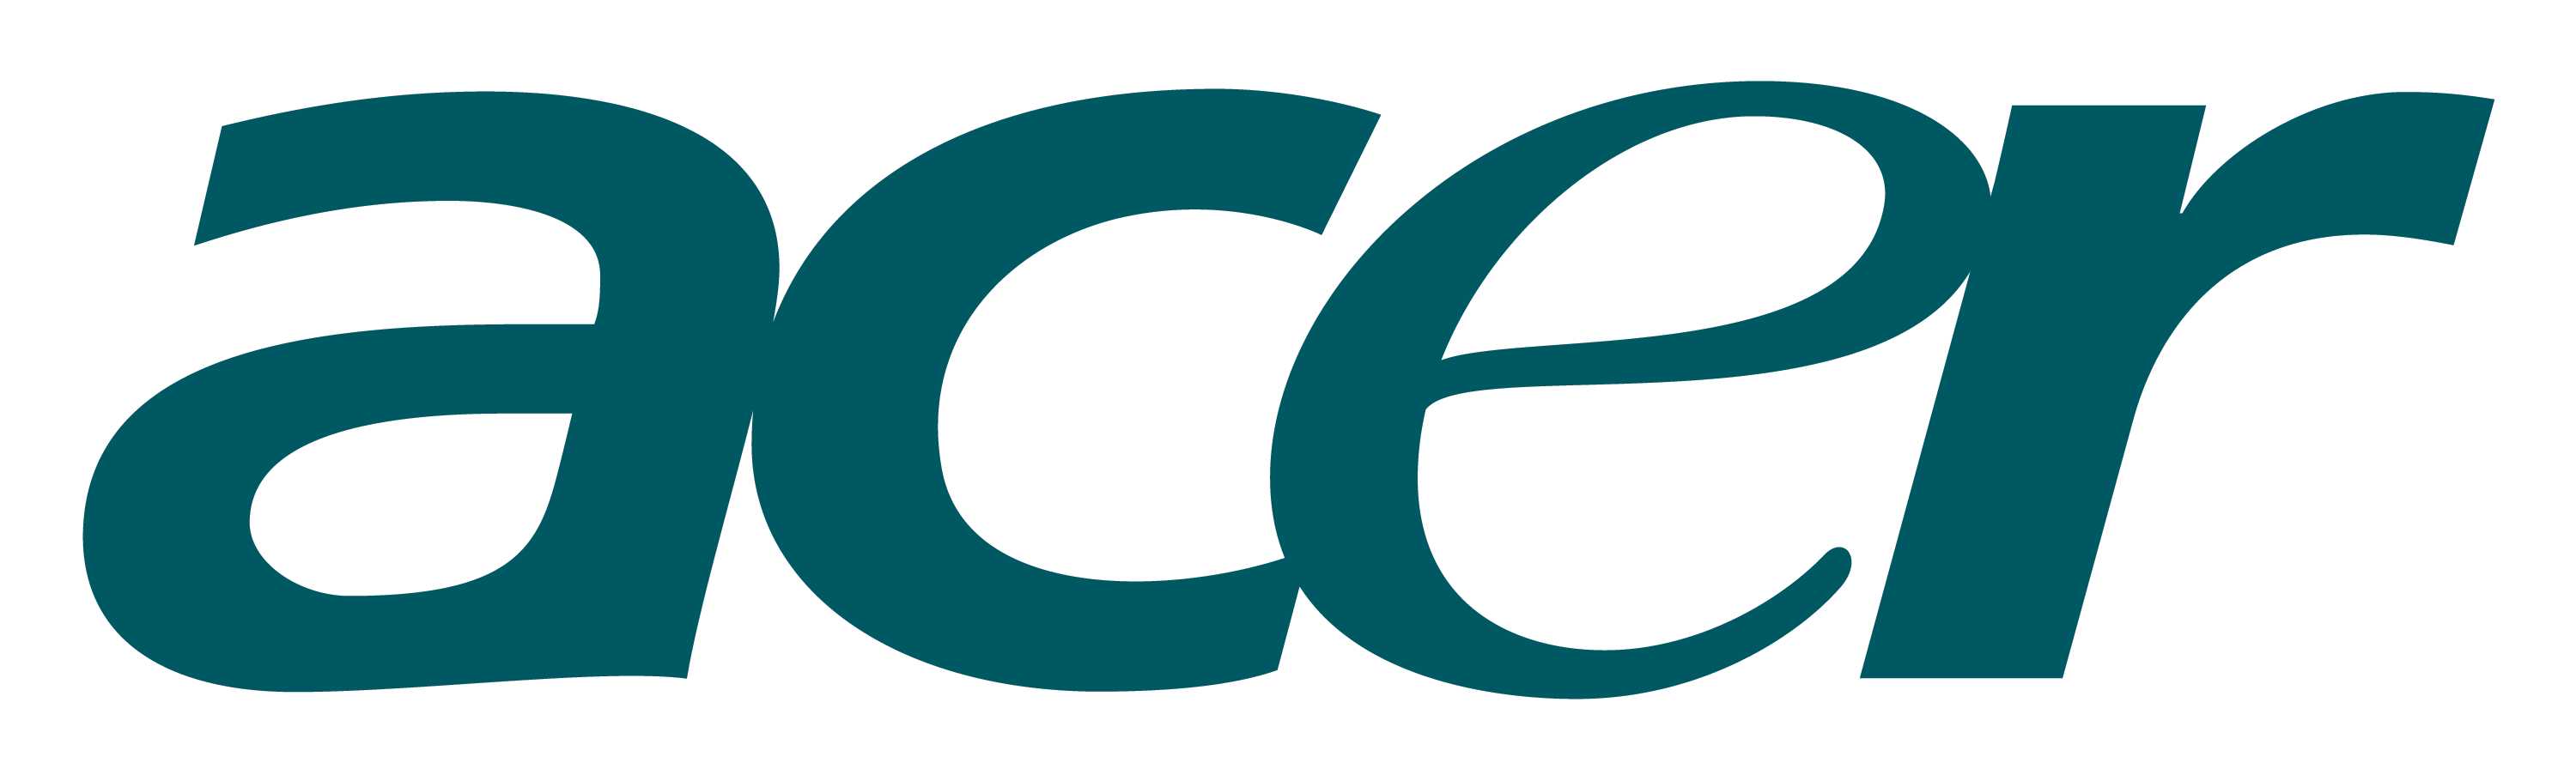 Seagate Logo photo - 1